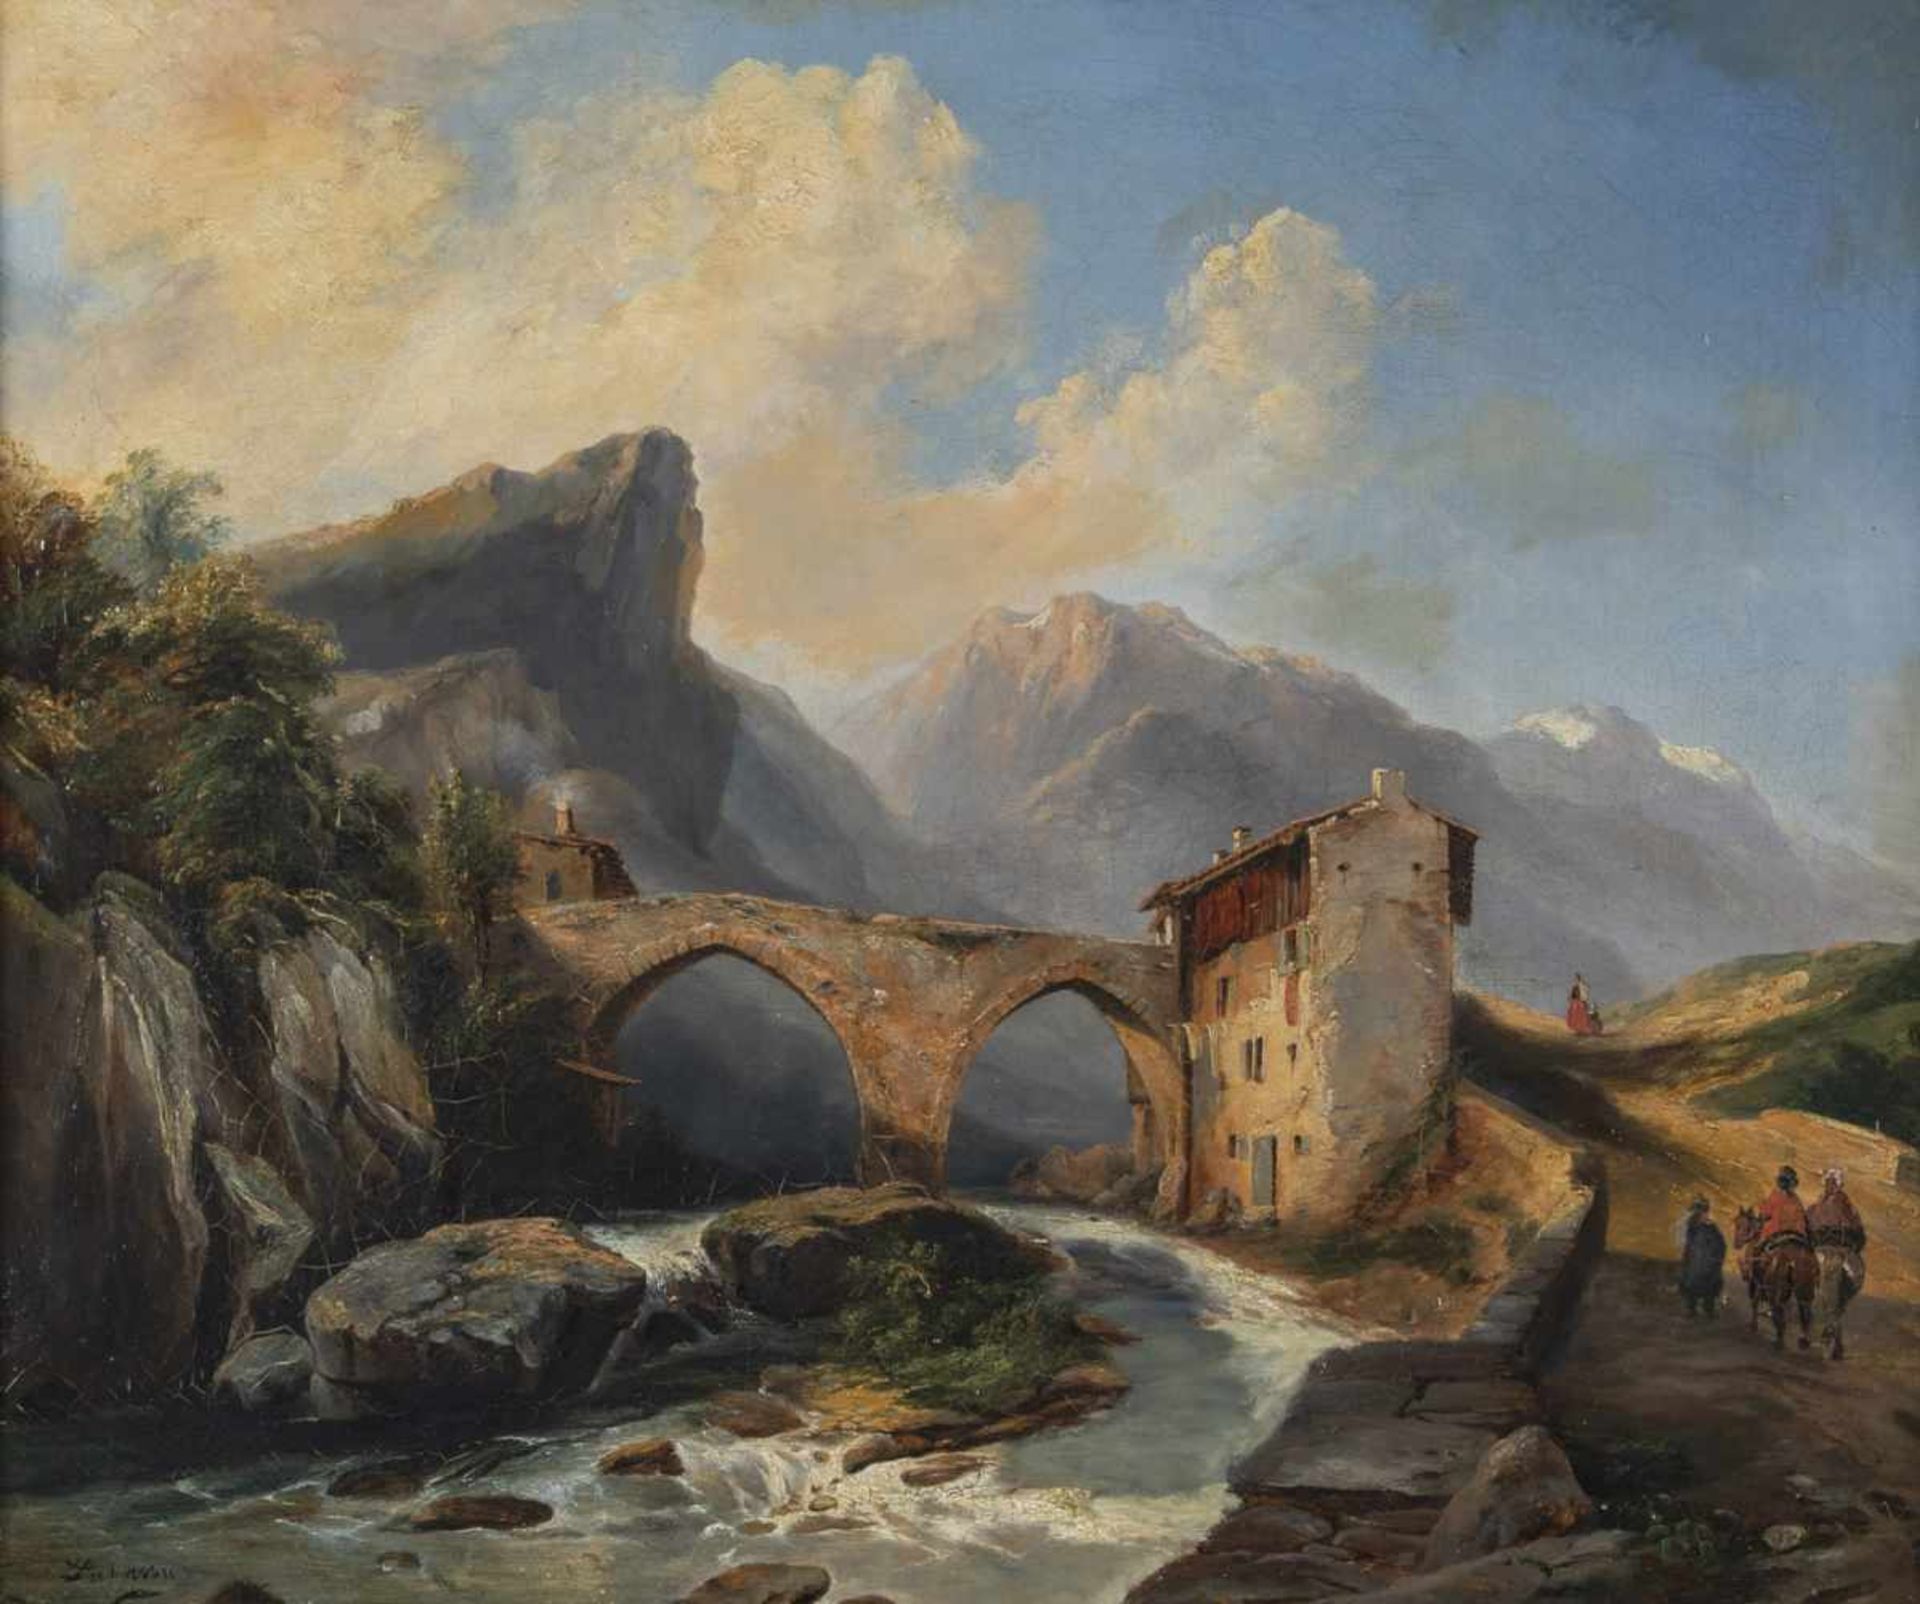 Ernest Laynaud (Attrib.). 1841-1928 France. Bridge in an alpine landscape. Oil on canvas,relined.